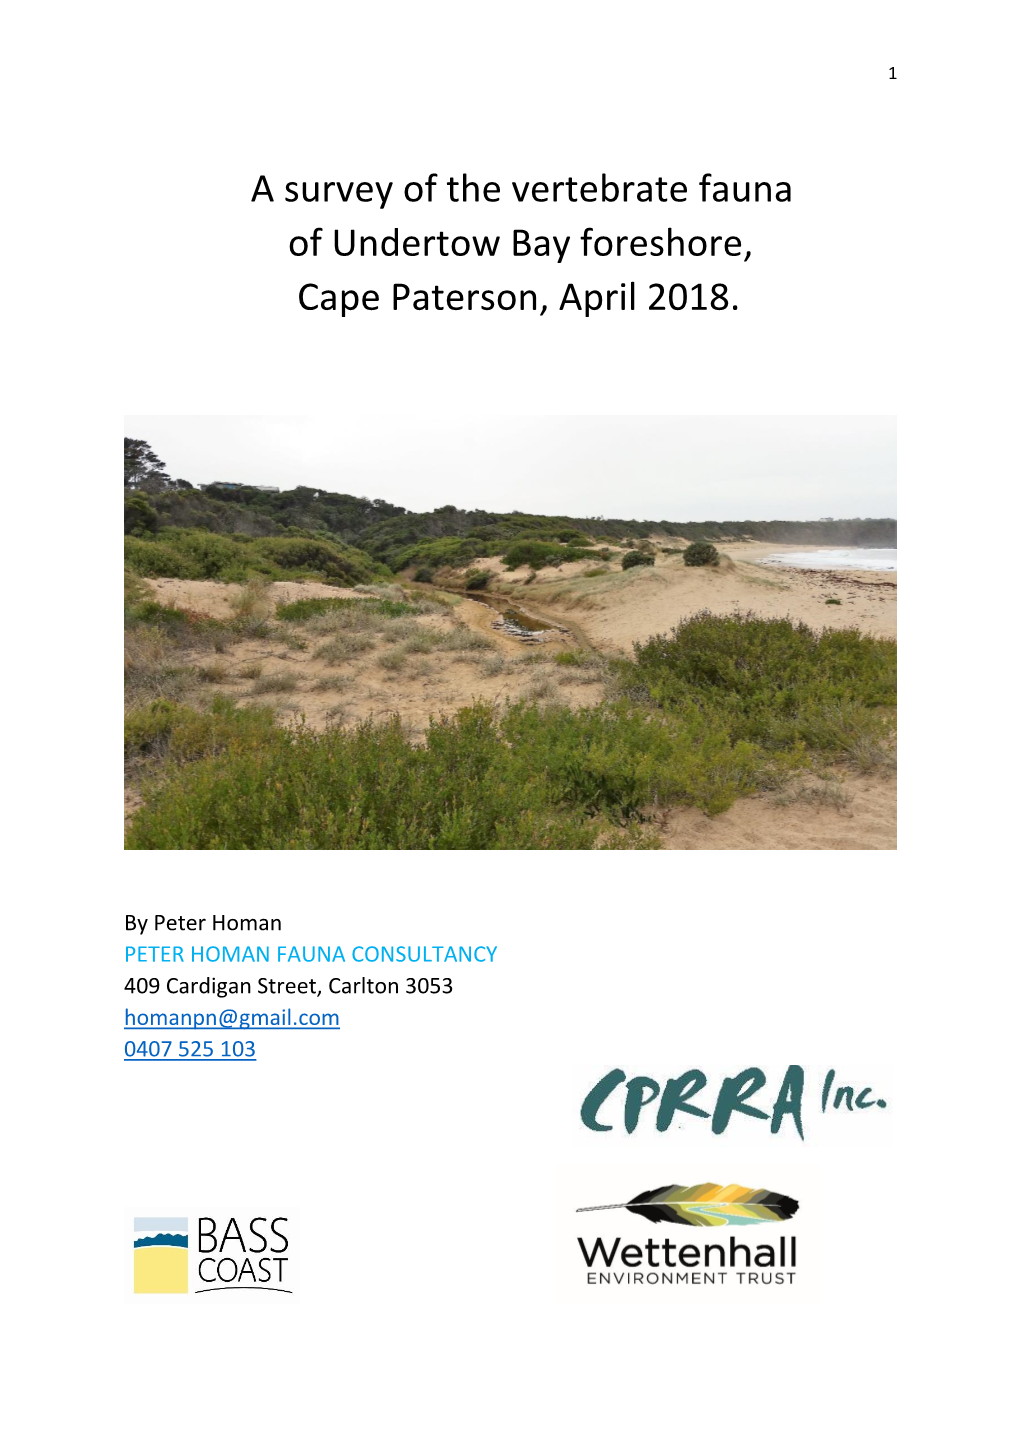 A Survey of the Vertebrate Fauna of Undertow Bay Foreshore, Cape Paterson, April 2018